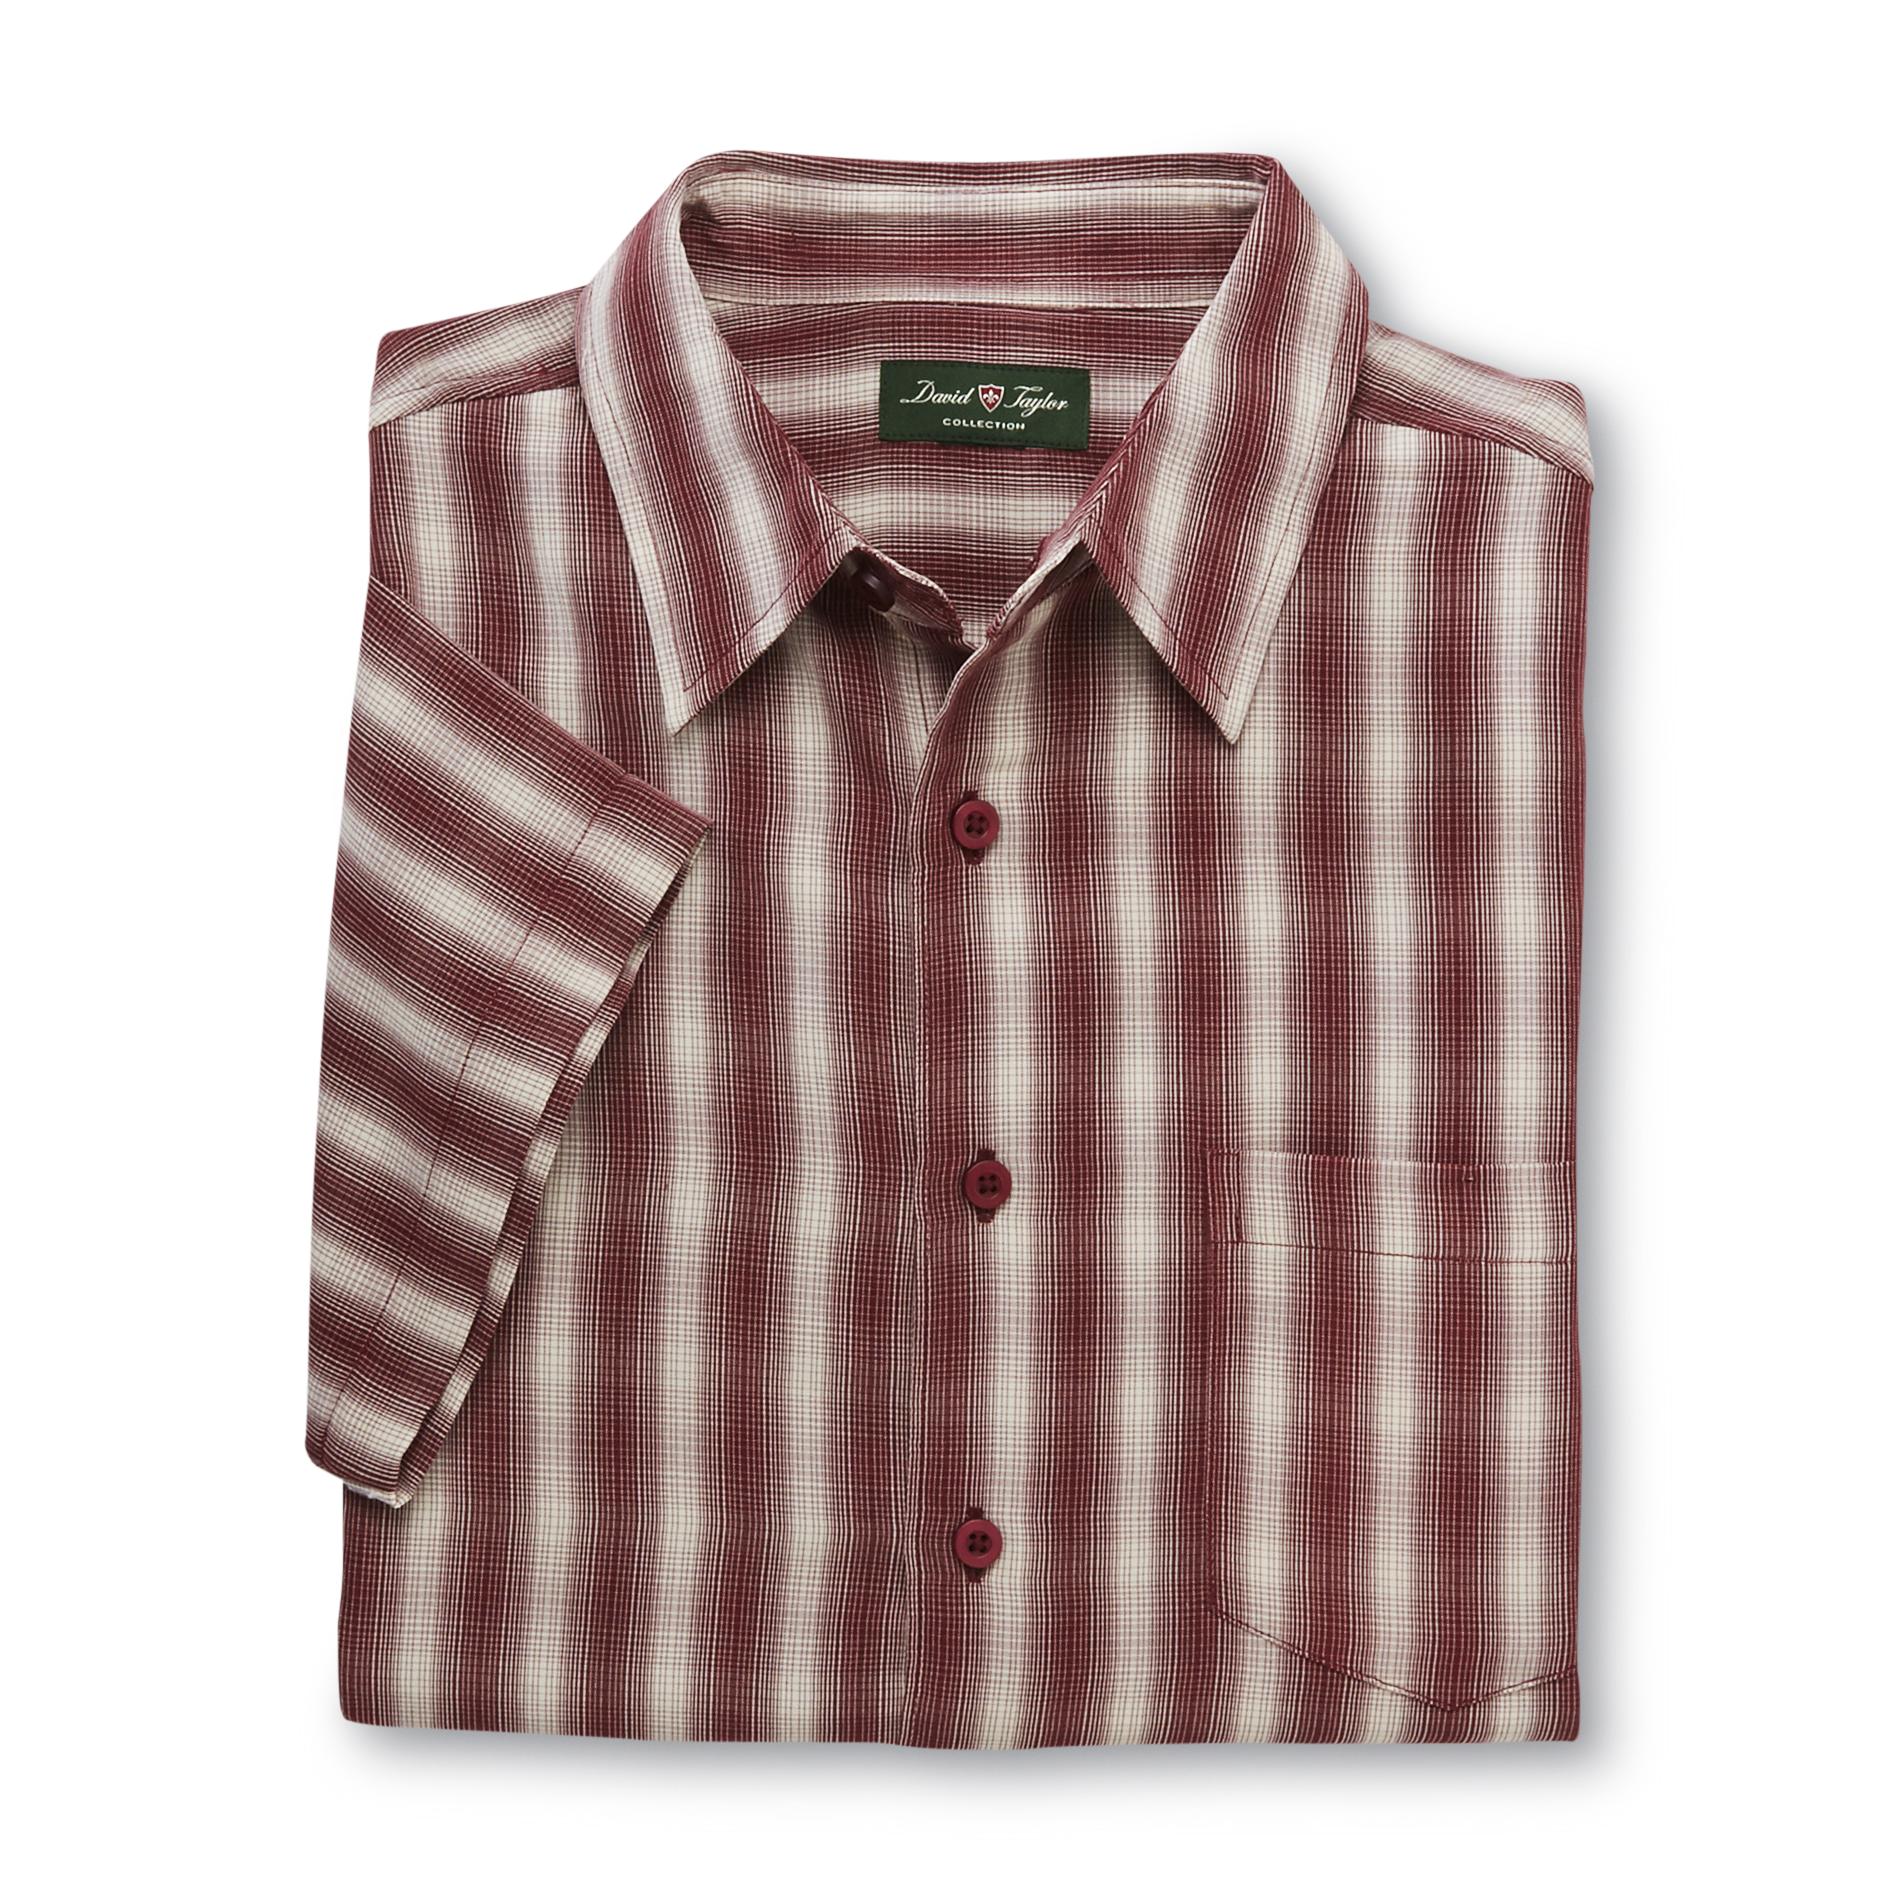 David Taylor Collection Men's Short-Sleeve Shirt - Microcheck Striped